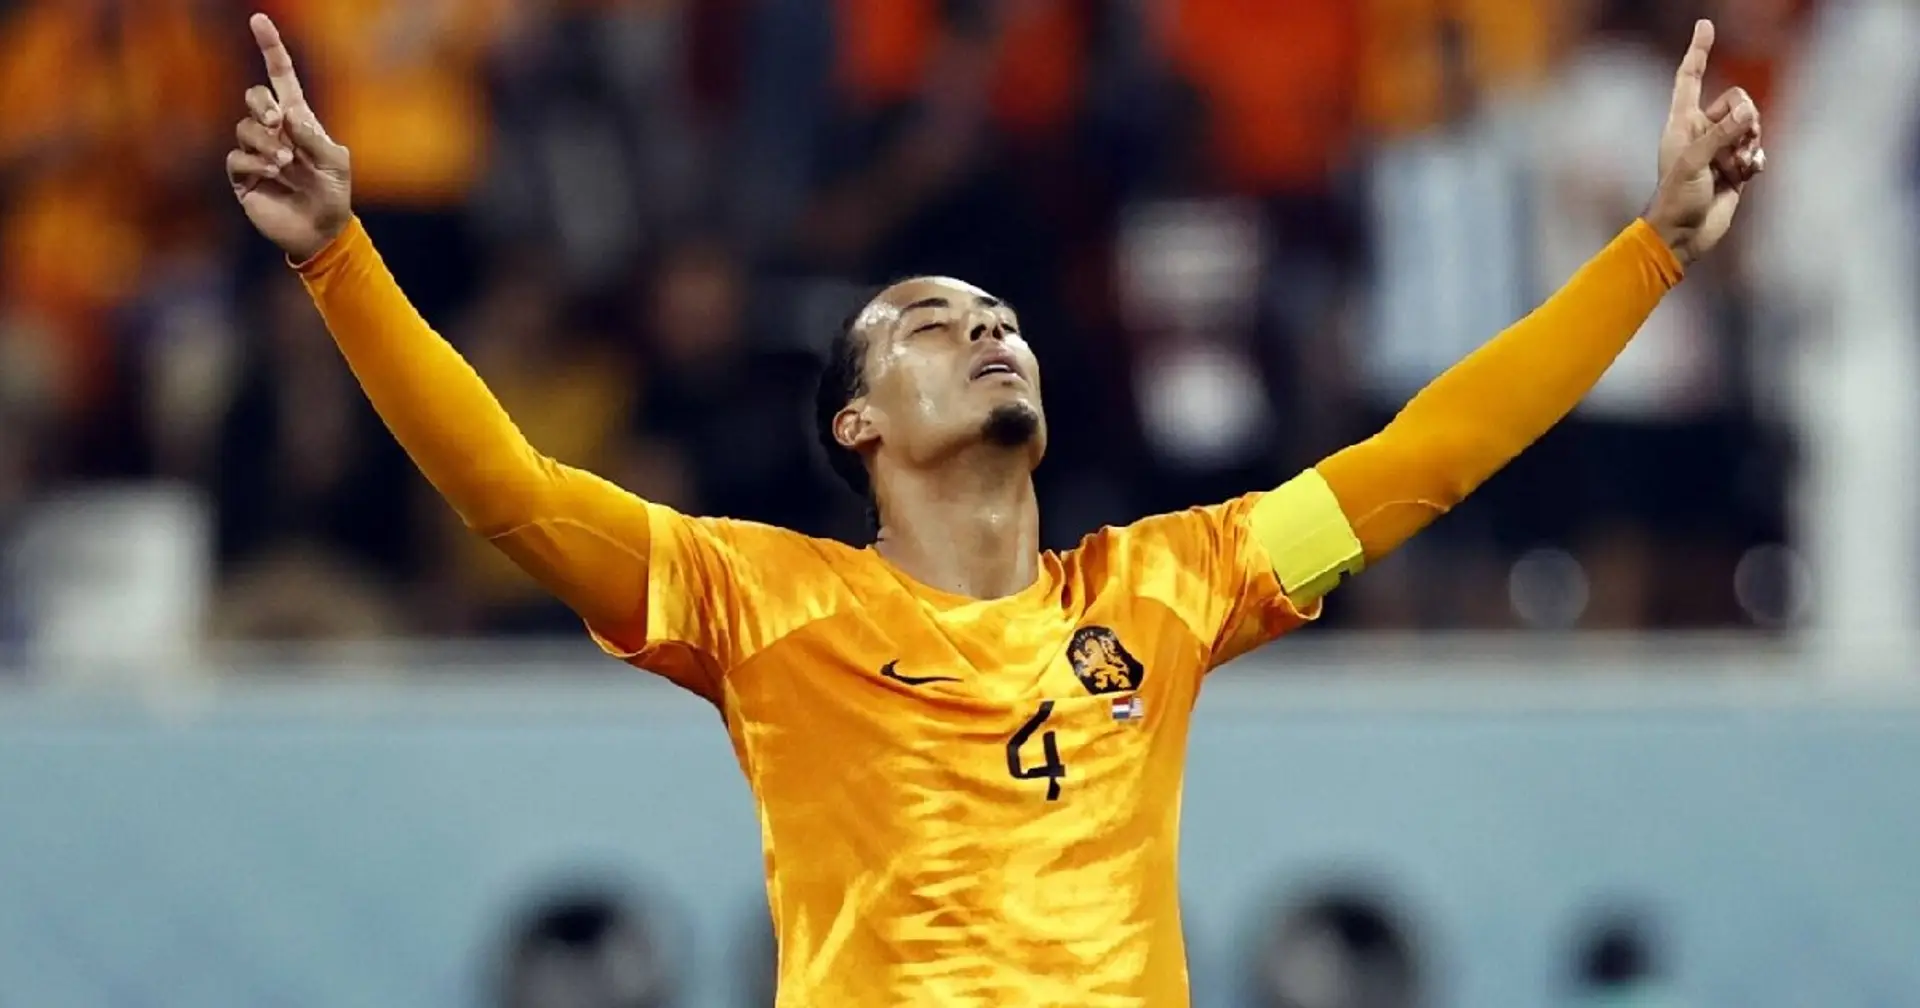 Van Dijk advances with Netherlands to World Cup quarter finals after win over USA